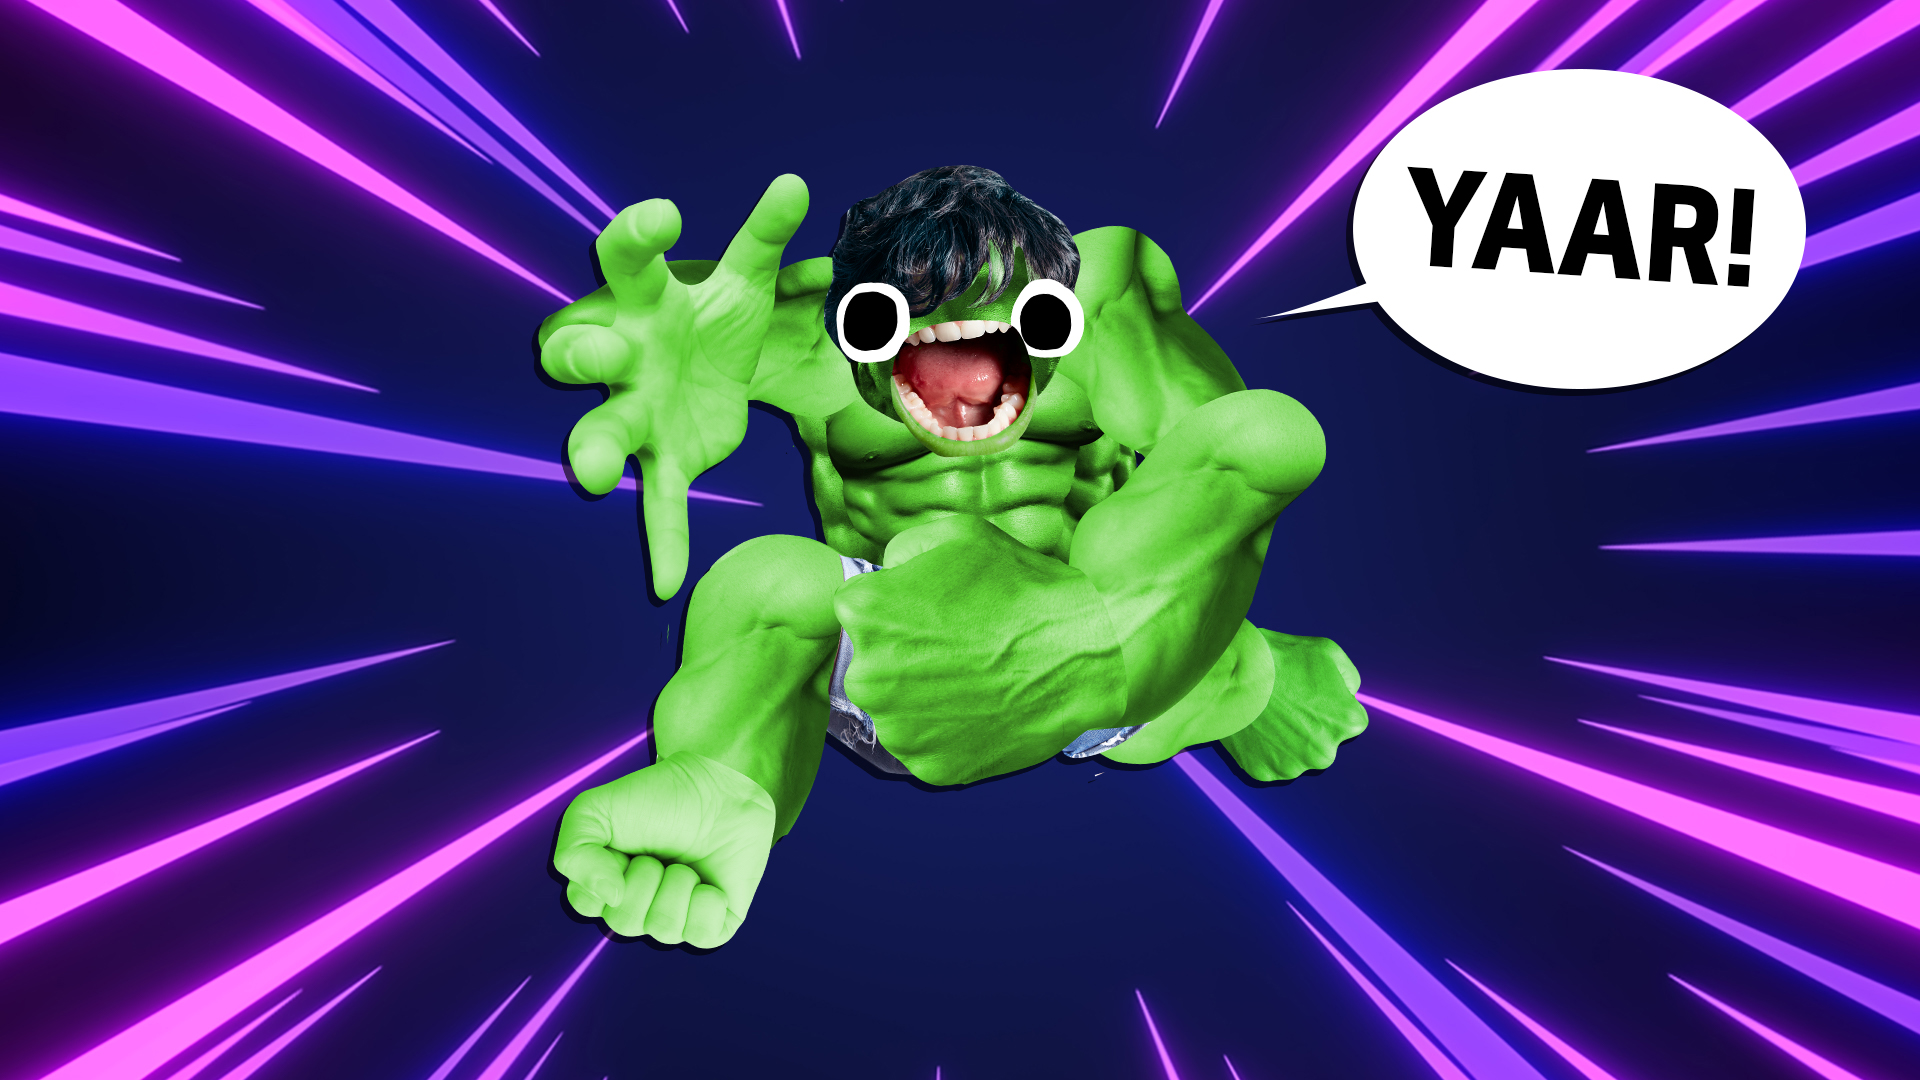 The Incredibe Hulk shouting YAAAR!